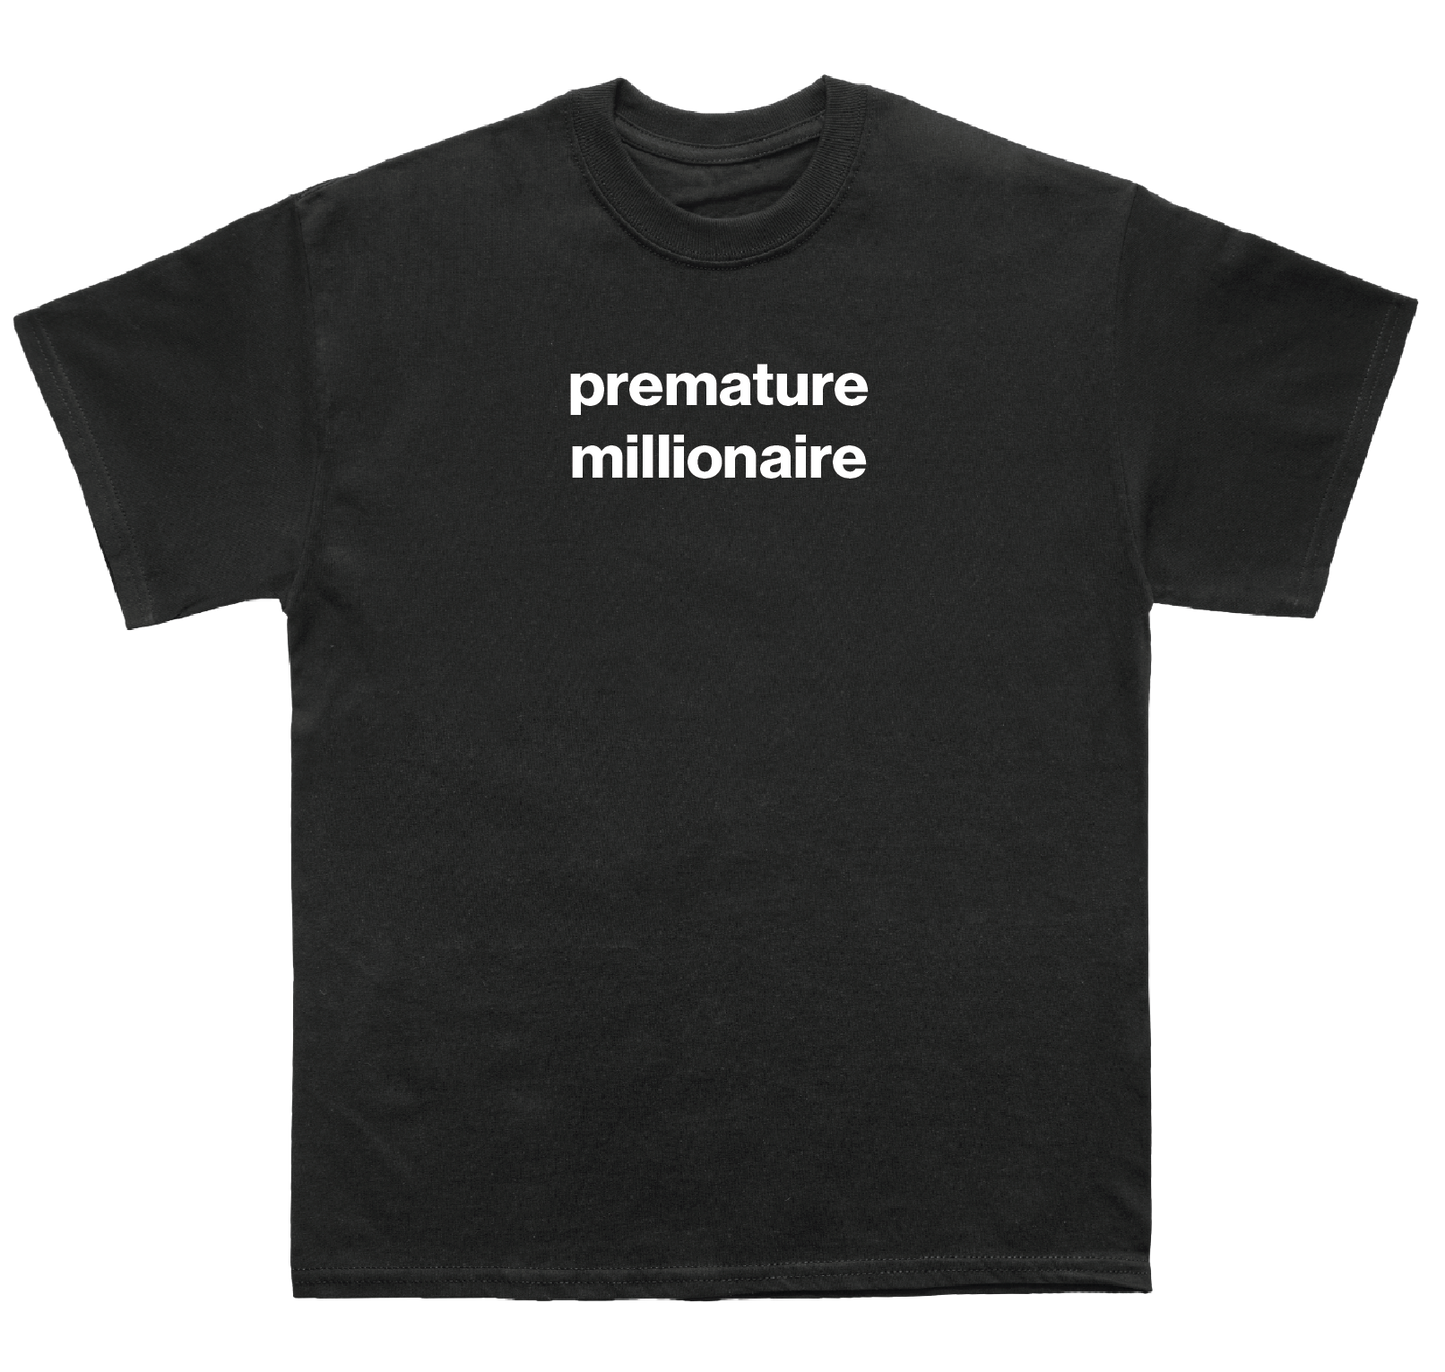 premature millionaire shirt